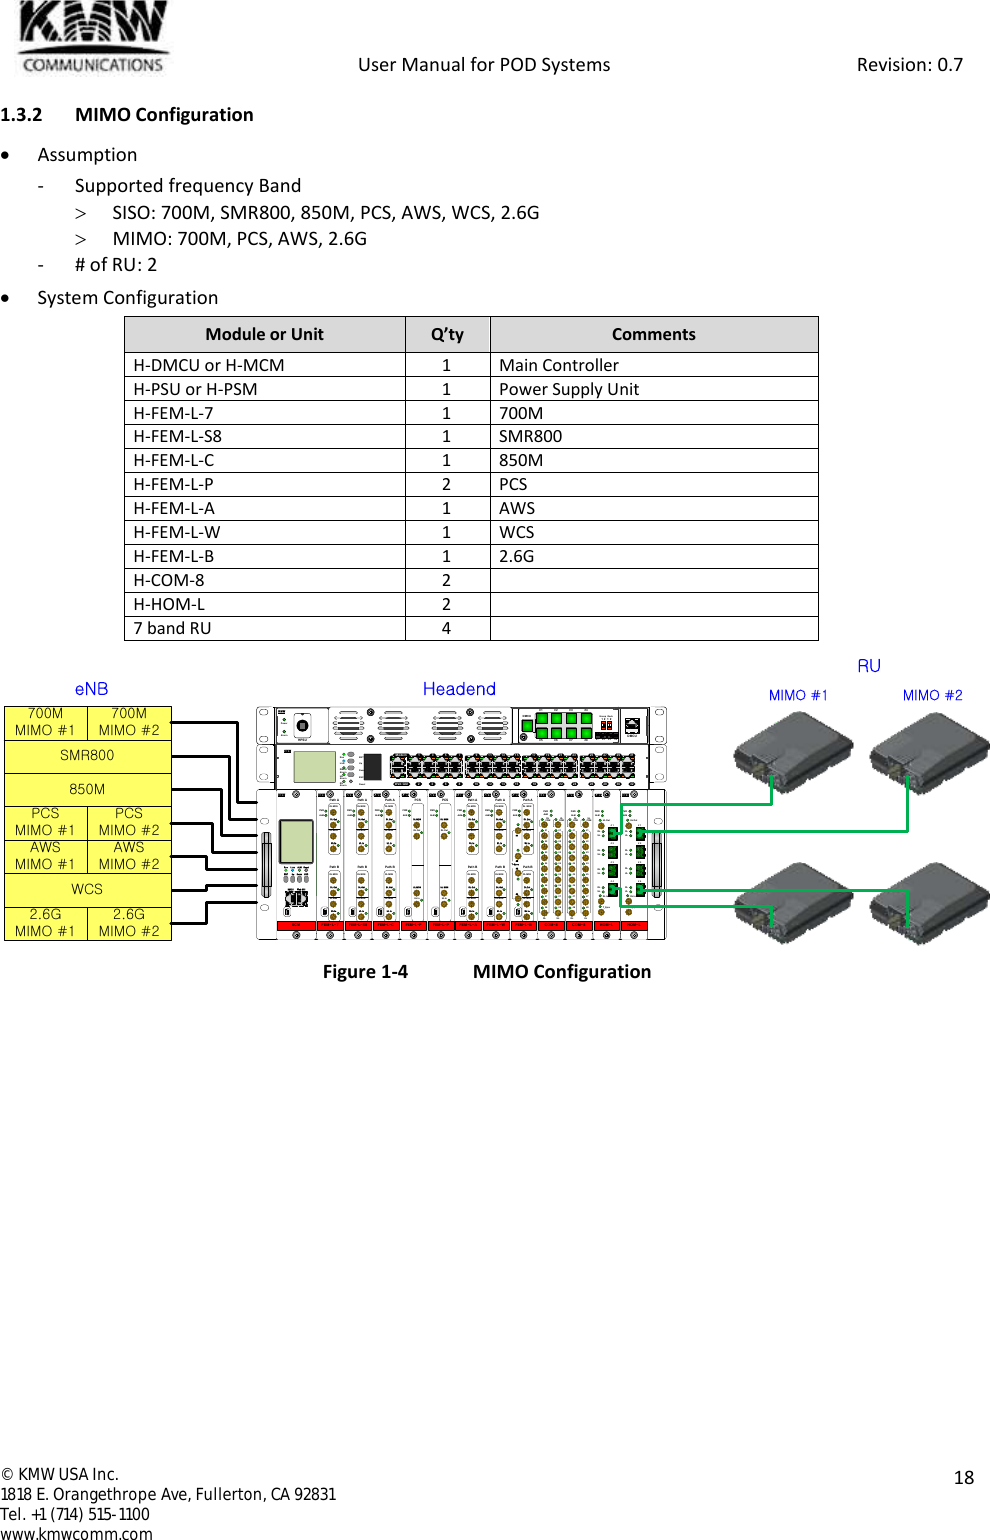            User Manual for POD Systems                                                     Revision: 0.7  ©  KMW USA Inc. 1818 E. Orangethrope Ave, Fullerton, CA 92831 Tel. +1 (714) 515-1100 www.kmwcomm.com  18  1.3.2 MIMO Configuration  Assumption - Supported frequency Band   SISO: 700M, SMR800, 850M, PCS, AWS, WCS, 2.6G  MIMO: 700M, PCS, AWS, 2.6G - # of RU: 2  System Configuration Module or Unit Q’ty Comments H-DMCU or H-MCM 1 Main Controller H-PSU or H-PSM 1 Power Supply Unit H-FEM-L-7 1 700M H-FEM-L-S8 1 SMR800 H-FEM-L-C 1 850M H-FEM-L-P 2 PCS H-FEM-L-A 1 AWS H-FEM-L-W 1 WCS H-FEM-L-B 1 2.6G H-COM-8 2  H-HOM-L 2  7 band RU 4    Figure 1-4  MIMO Configuration   FEM-L-WUL MONDL MONDL OutUL InUL MONDL MONDL OutUL InPWRALMPath APath BKMWFEM-L-AUL MONDL MONDL OutUL InUL MONDL MONDL OutUL InPWRALMPath APath BKMWFEM-L-7UL MONDL MONDL OutUL InUL MonDL MONDL OutUL InPWRALMPath APath BKMWFEM-L-S8UL MONDL MONDL OutUL InUL MONDL MONDL OutUL InPWRALMPath APath BKMWFEM-L-CUL MONDL MONDL OutUL InUL MONDL MONDL OutUL InPWRALMPath APath BKMWFEM-L-BUL MONDL  MONDLOutUL InUL MONDL MONDL OutUL InPWRALMPath APath B#1#2#3#4T-SyncKMWFEM-L-PDL OutUL MONUL InDL MONPWRALMPCSKMWRun Link ALM ResetENT Up Down ESCDMCU Web GUISCMKMWCOM-8PWRALMDLCOM#1#2#3#4#5#6#7#8#1#2#3#4#5#6#7#8ULCOMDL ULKMWHOM-LPWRALMUL OutDL InT_SyncDLULDLULDLULDLULKMW# 1# 2# 3# 4ENTUpDownESCResetRunDMCUAlarmLinkHEAlarmRUAlarm12345 76 89 11 13 1510 12 14 1617 19 21 2318 20 22 2425 27 29 3126 28 30 32ModemWeb GUIKMWDMCUHPSUPowerAlarm#1             #2             #3             #4#5             #6             #7             #8DMCU   #1     #2     #3     #41 2  1 2Group  RackKMW700MMIMO #2eNBPCSMIMO #2AWSMIMO #22.6GMIMO #2HeadendRUFEM-L-PDL OutUL MONUL InDL MONPWRALMPCSKMW700MMIMO #1SMR800850MPCSMIMO #1AWSMIMO #1WCS2.6GMIMO #1 HOM-LPWRALMUL OutDL InT_SyncDLULDLULDLULDLULKMW# 1# 2# 3# 4MIMO #1 MIMO #2COM-8PWRALMDLCOM#1#2#3#4#5#6#7#8#1#2#3#4#5#6#7#8ULCOMDL ULKMW